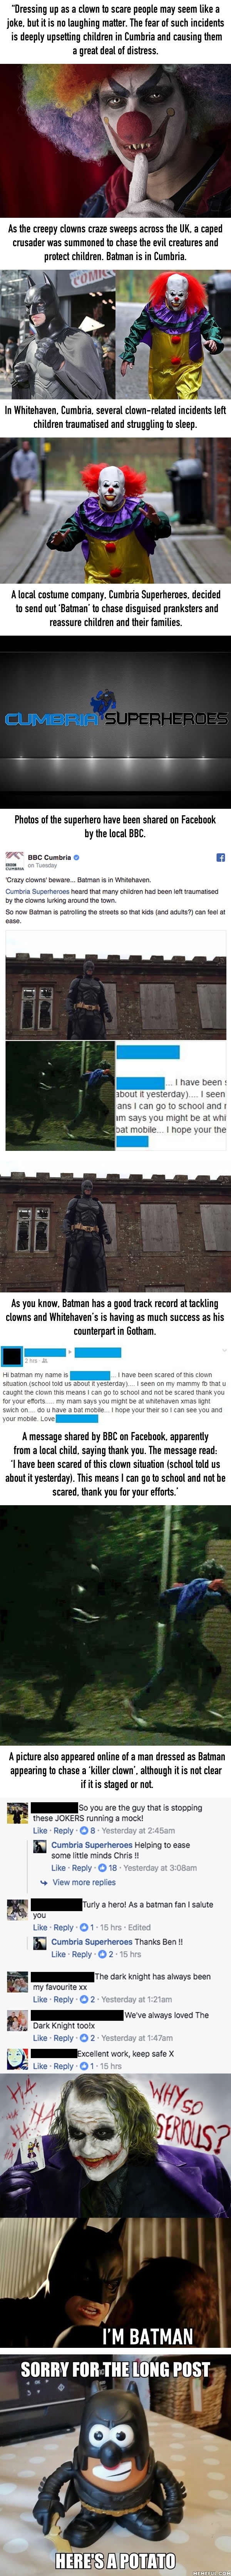 Batman is now chasing off killer clowns in UK